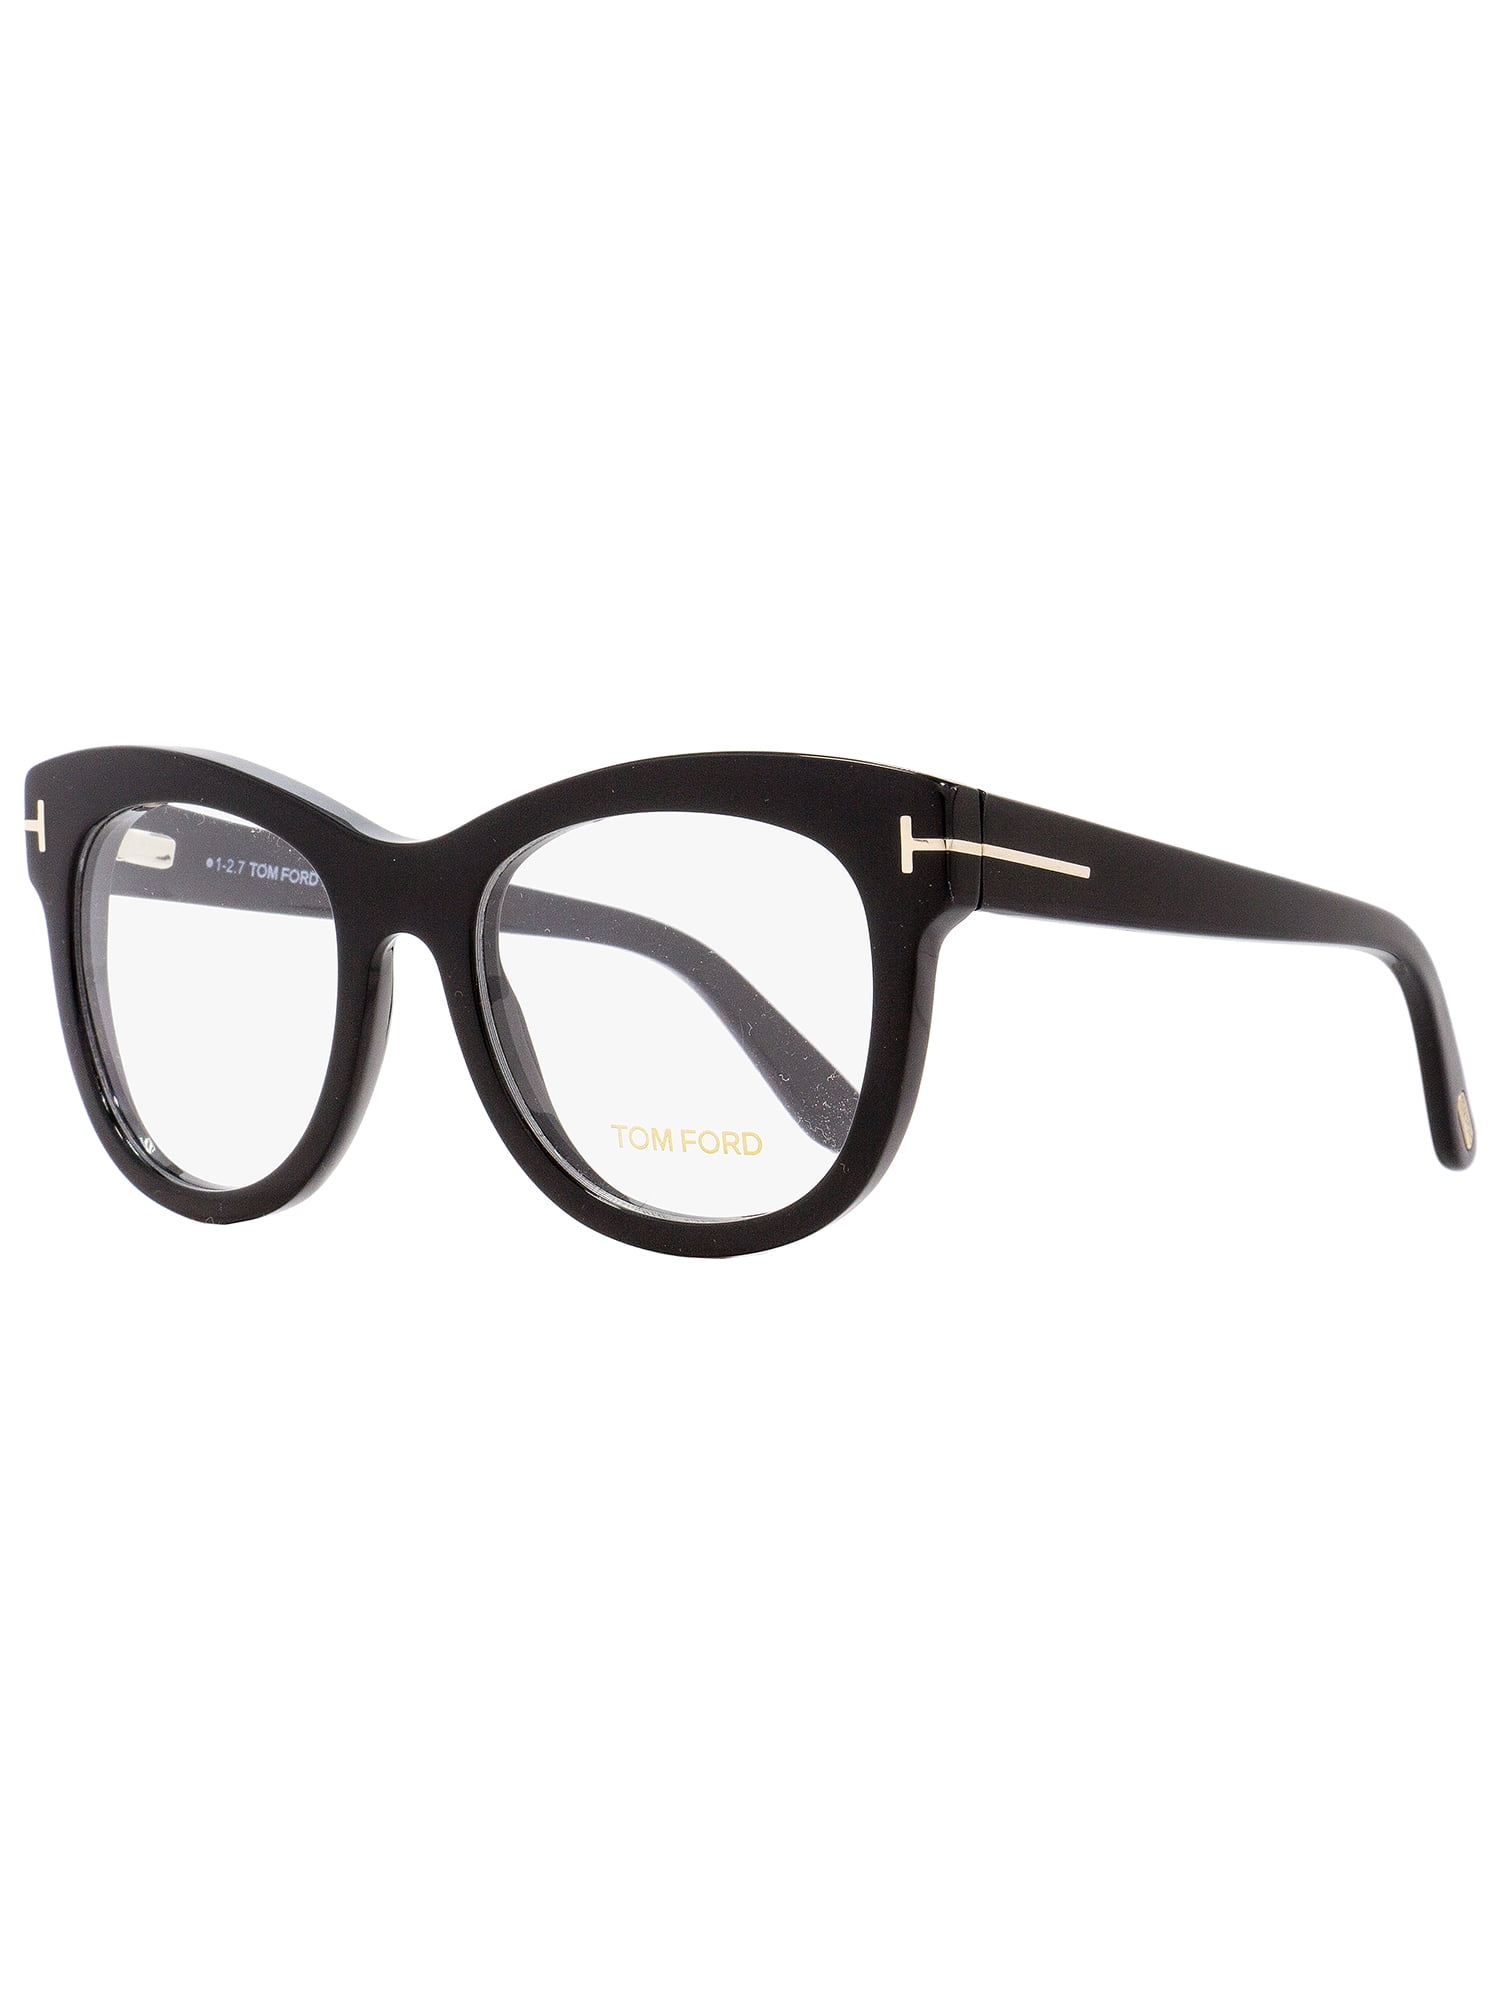 Tom Ford Ft5463 Square Woman Eyeglasses 